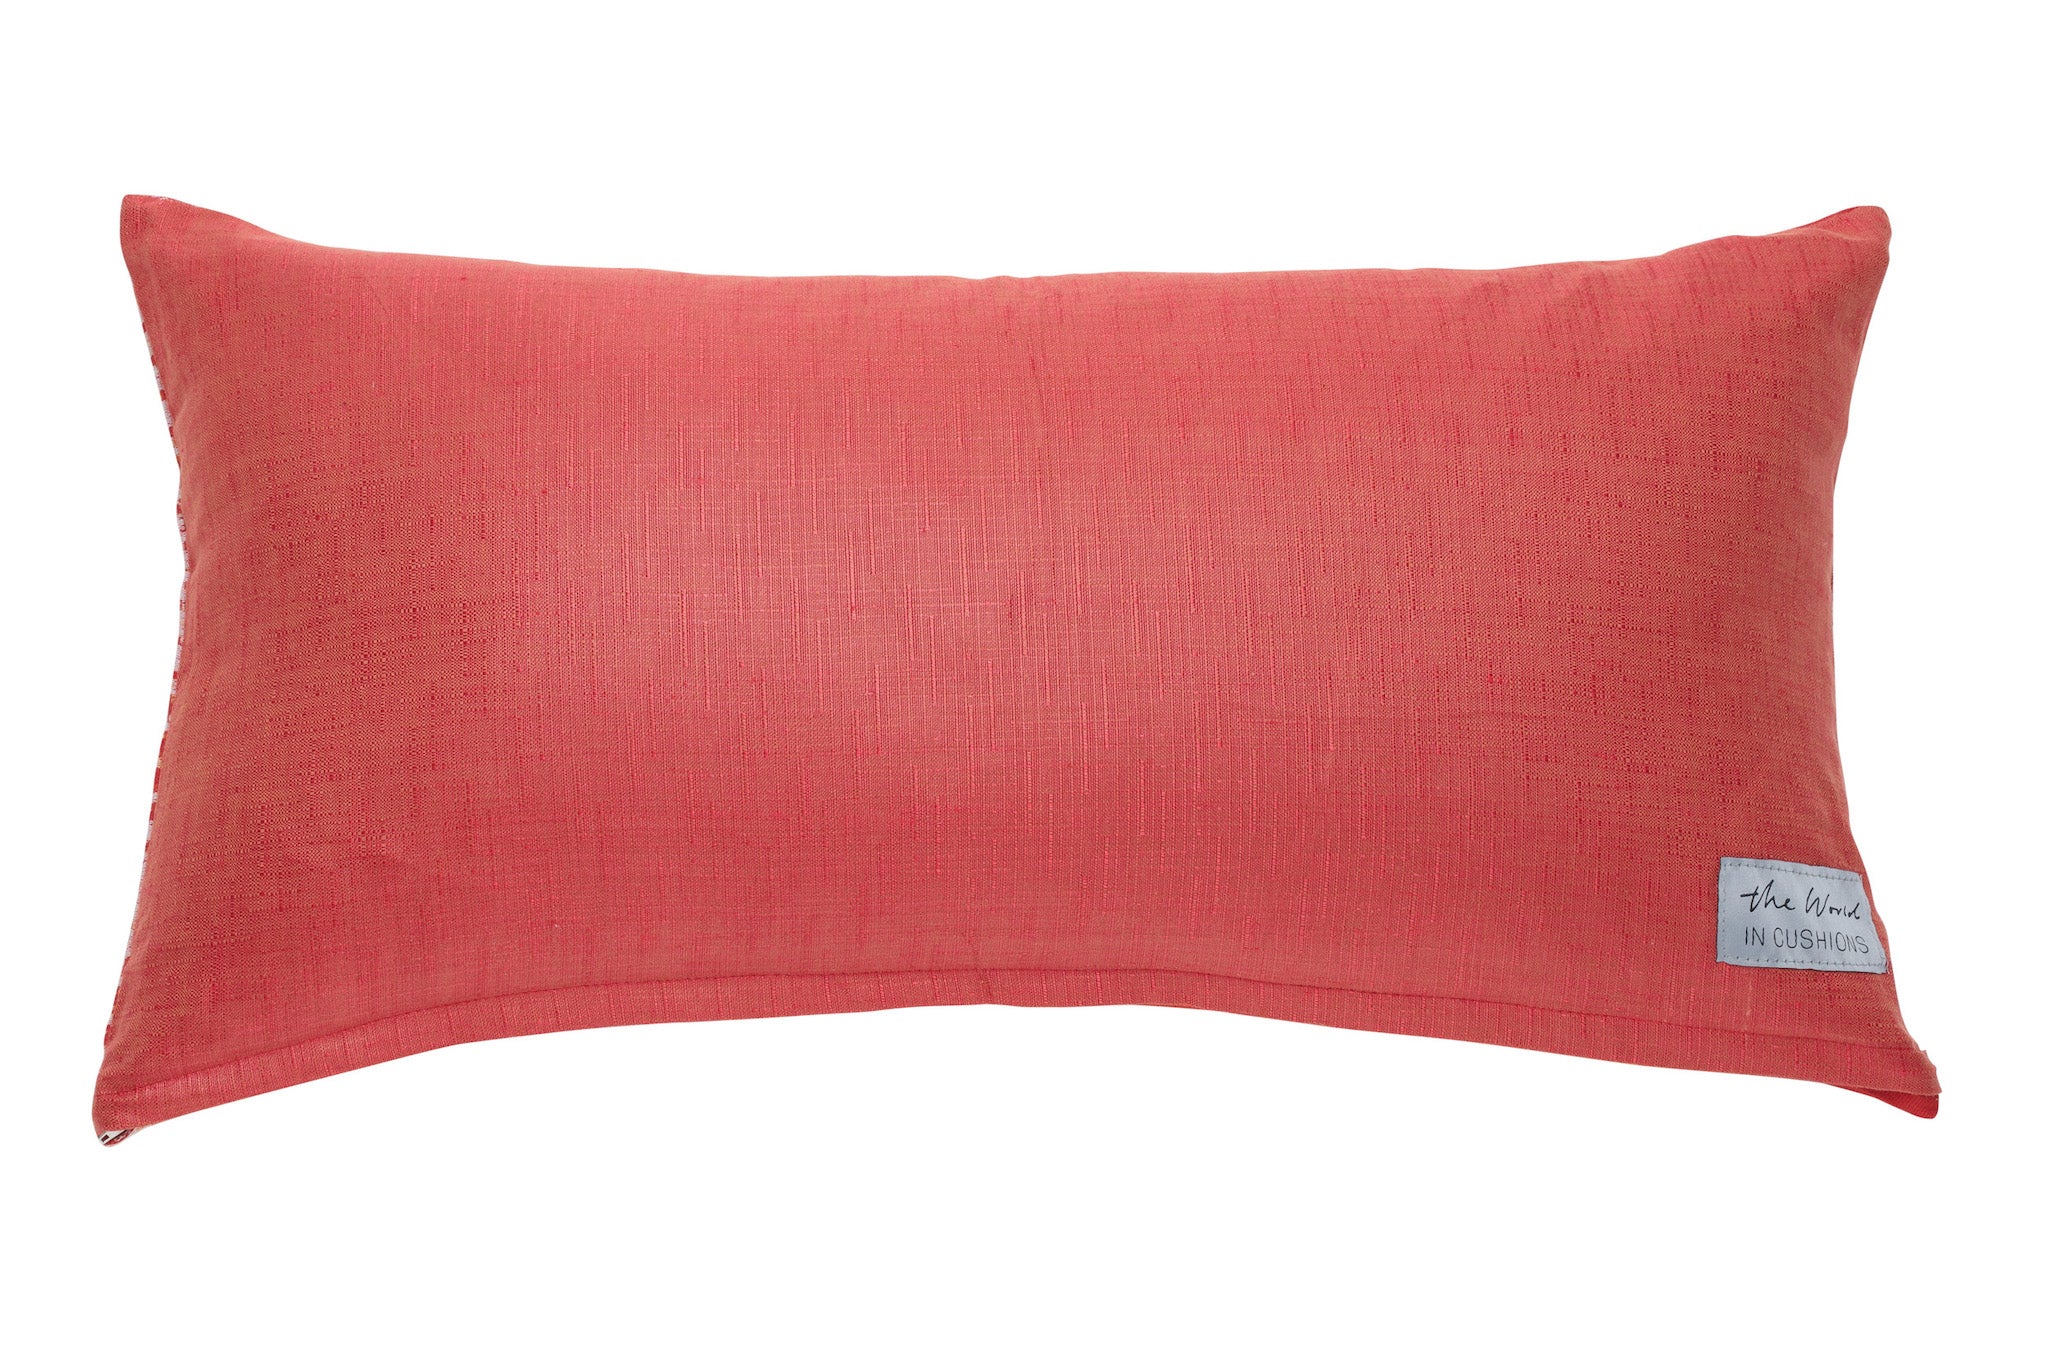 Terracotta Orange Linen Rectangle Scatter Cushion from Bali, Indonesia -  BACK